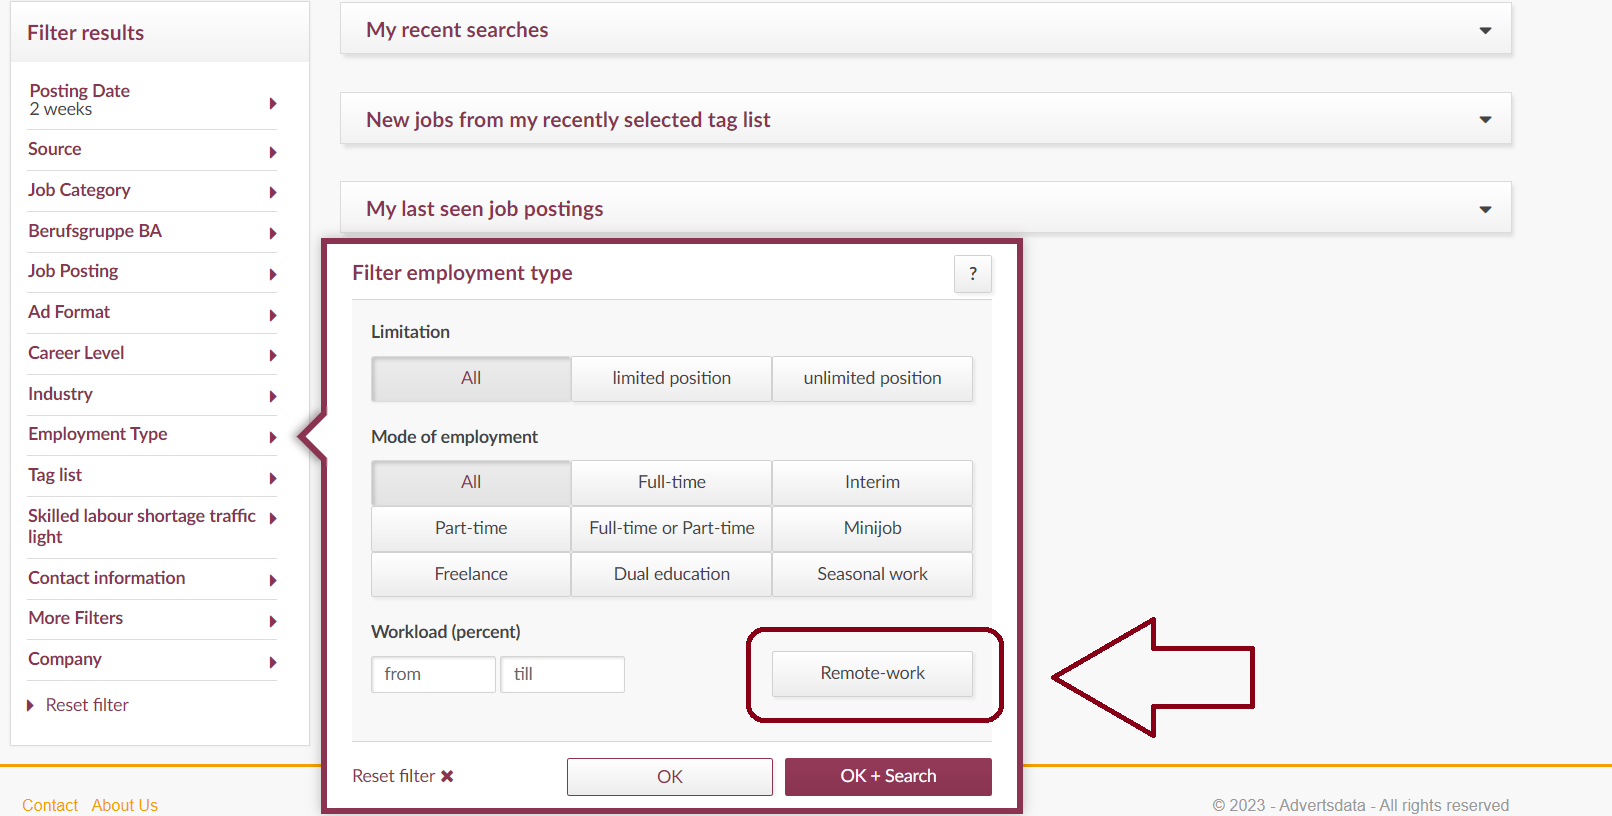 Function Filter employment type Remote-work